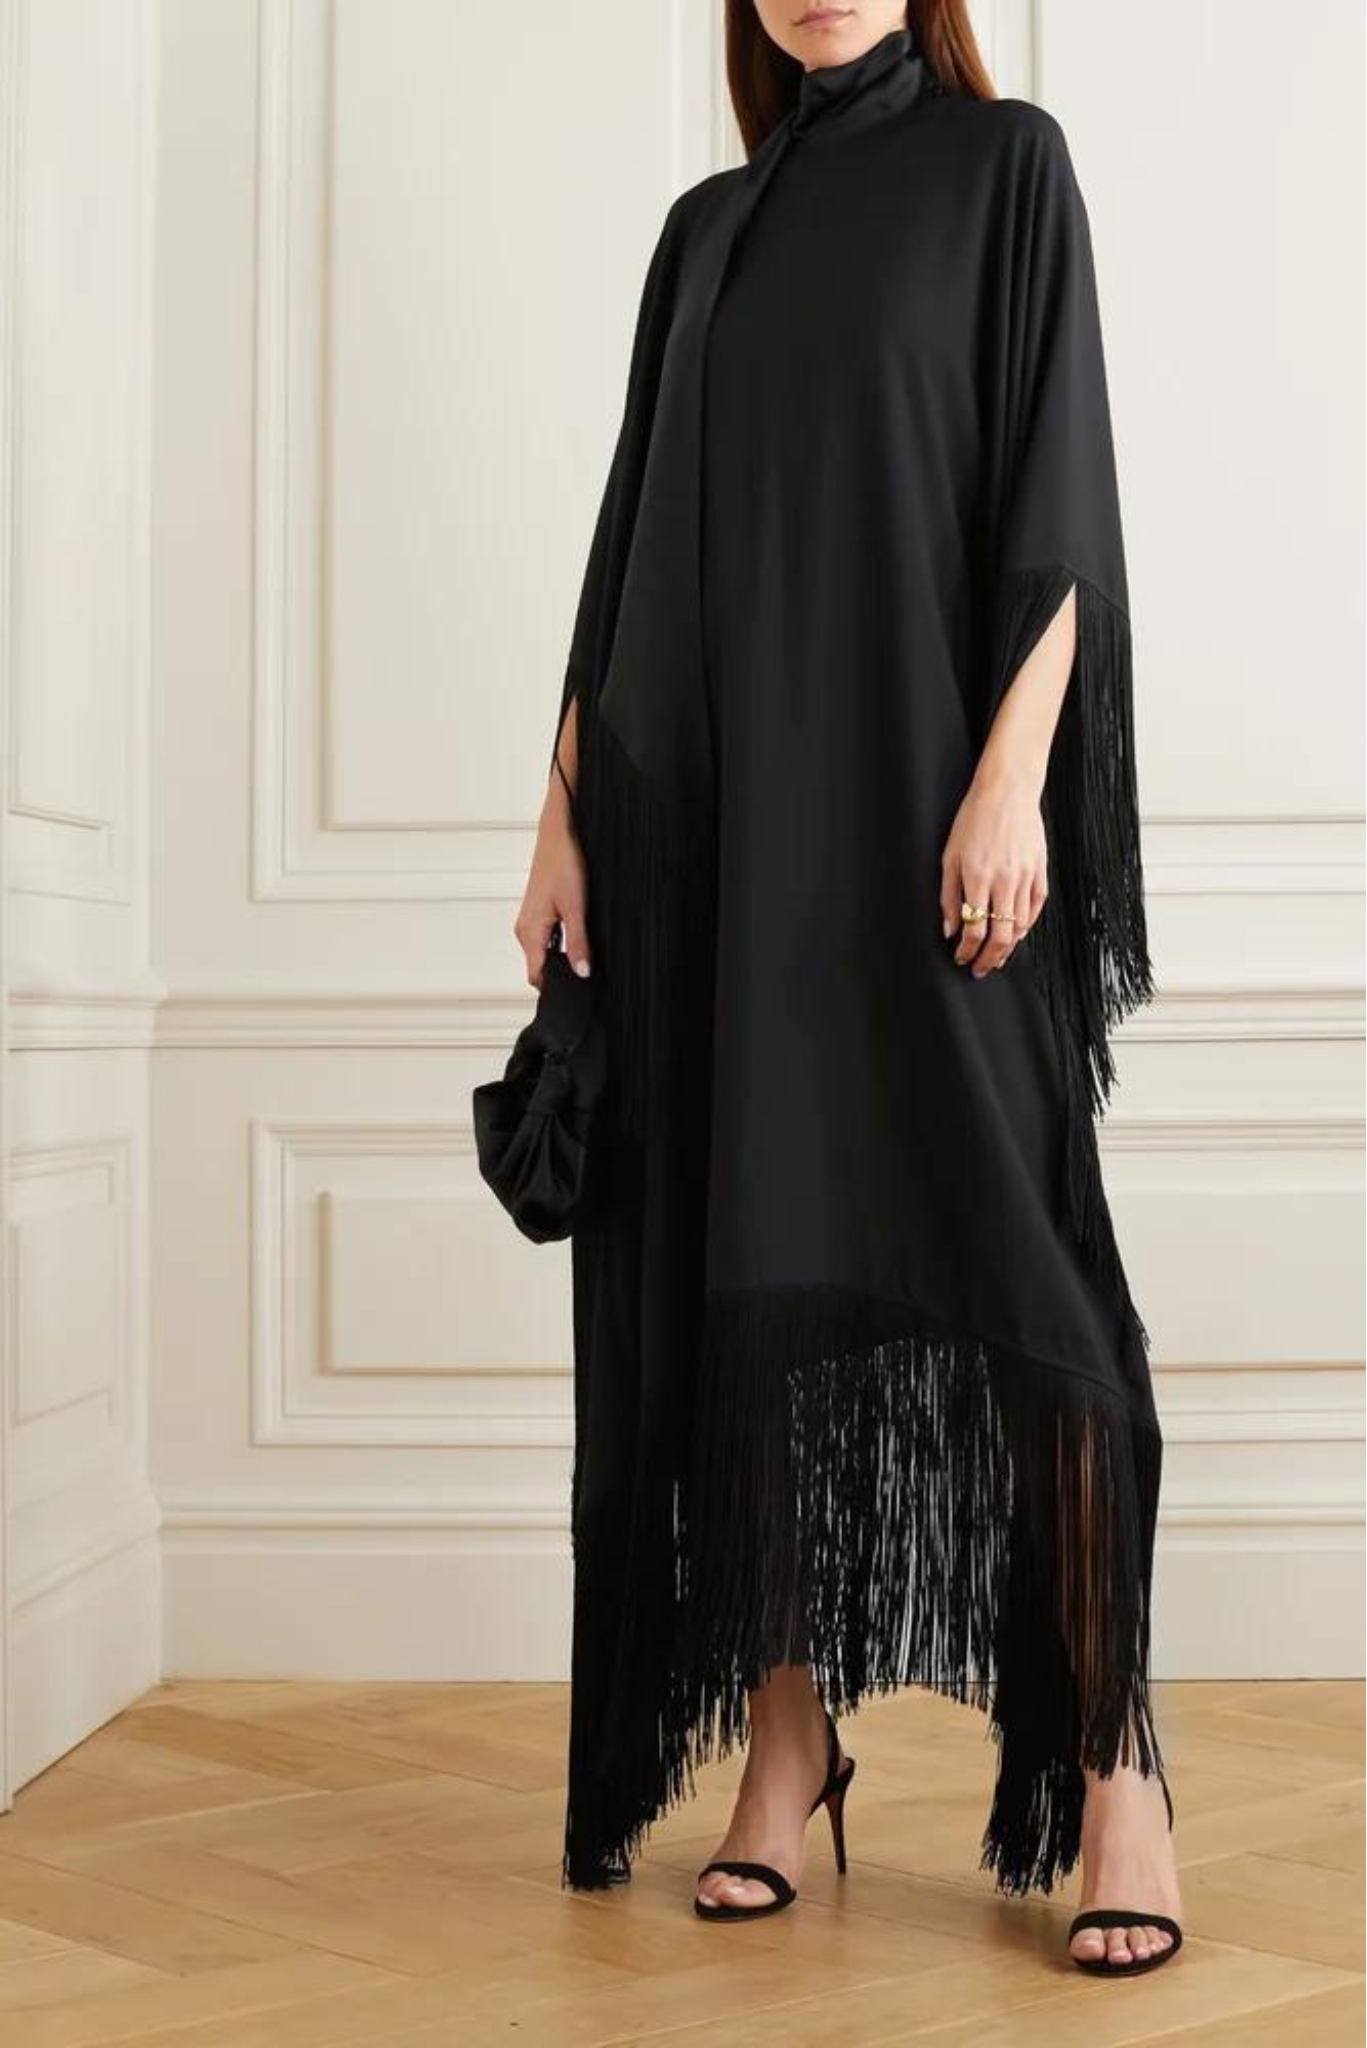 Discover Black Dresses for Women Online at a la mode